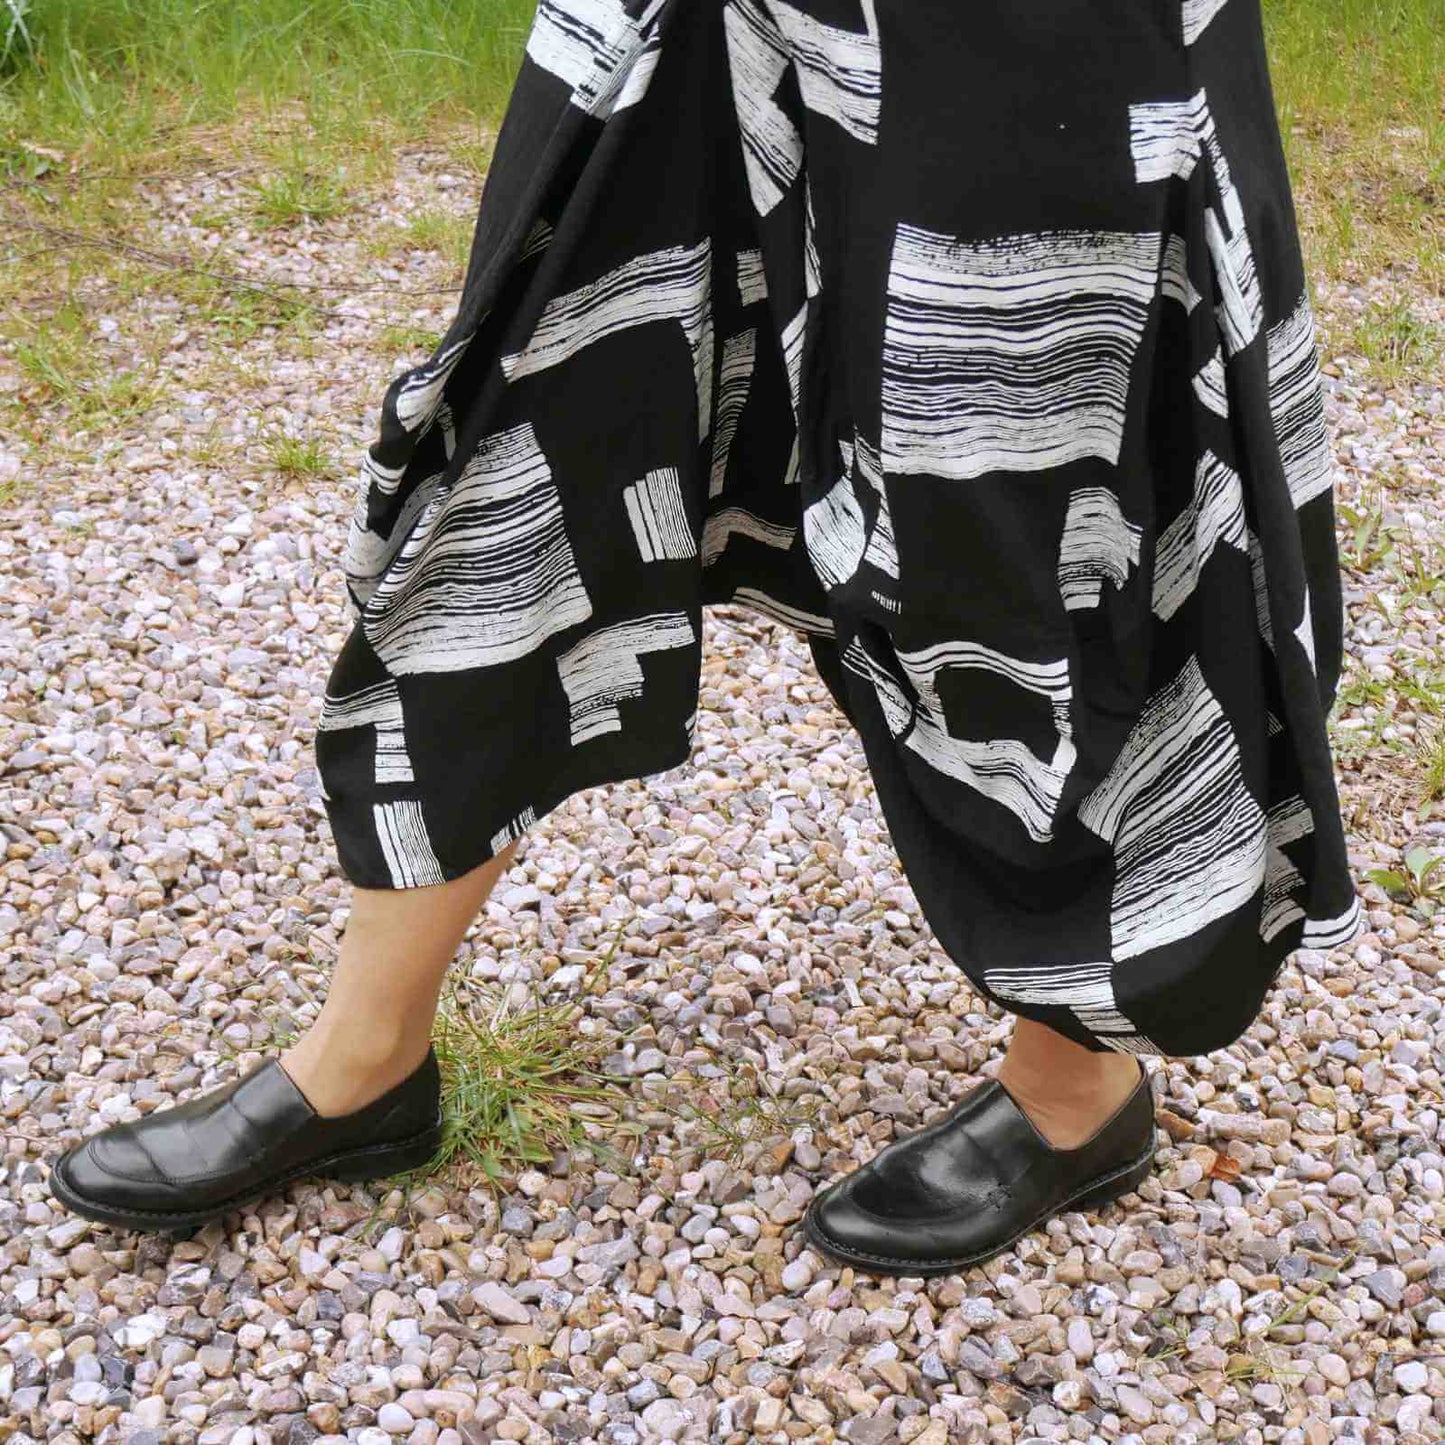 sort hvid nederdel fra E-Avantgarde med loafers på grus